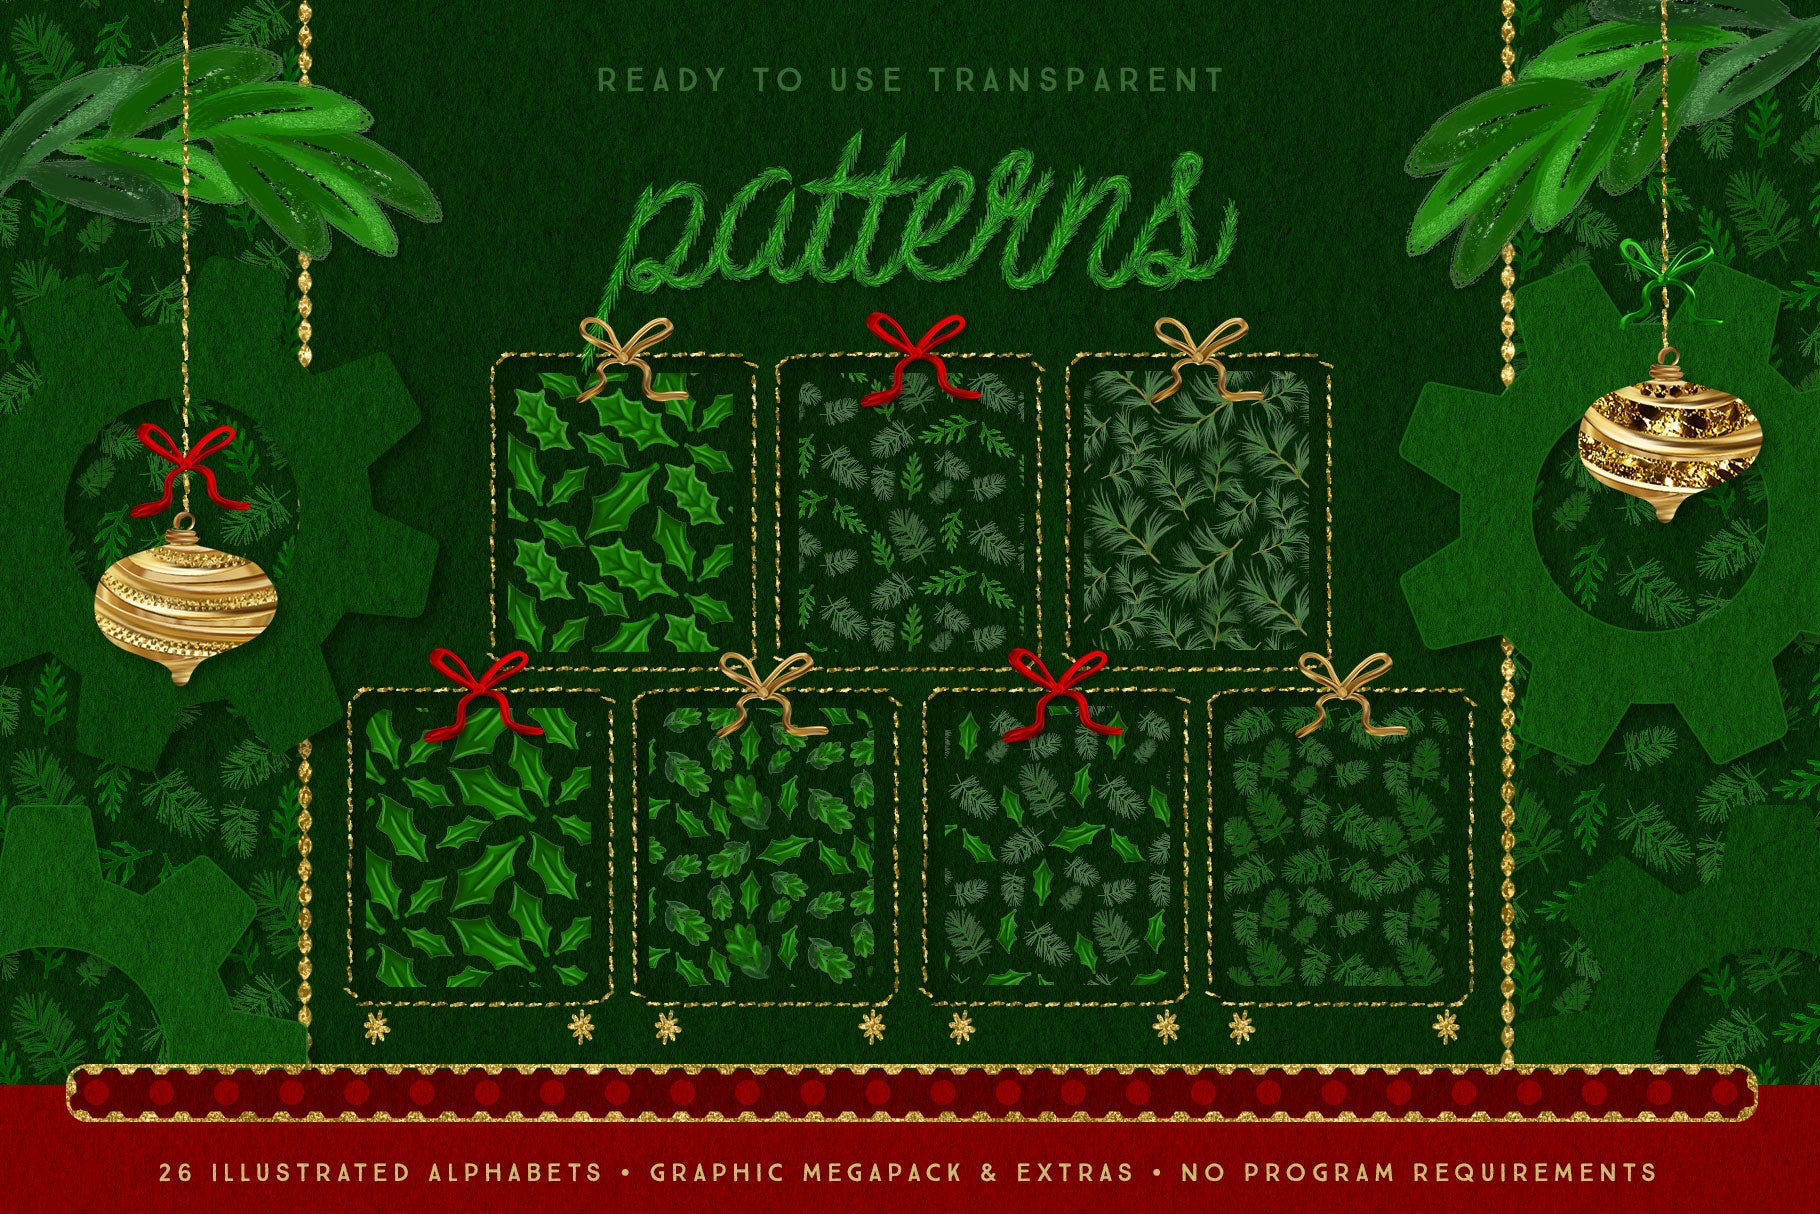 Luxe Christmas & Holiday Greenery Alphabets: mistletoe patterns